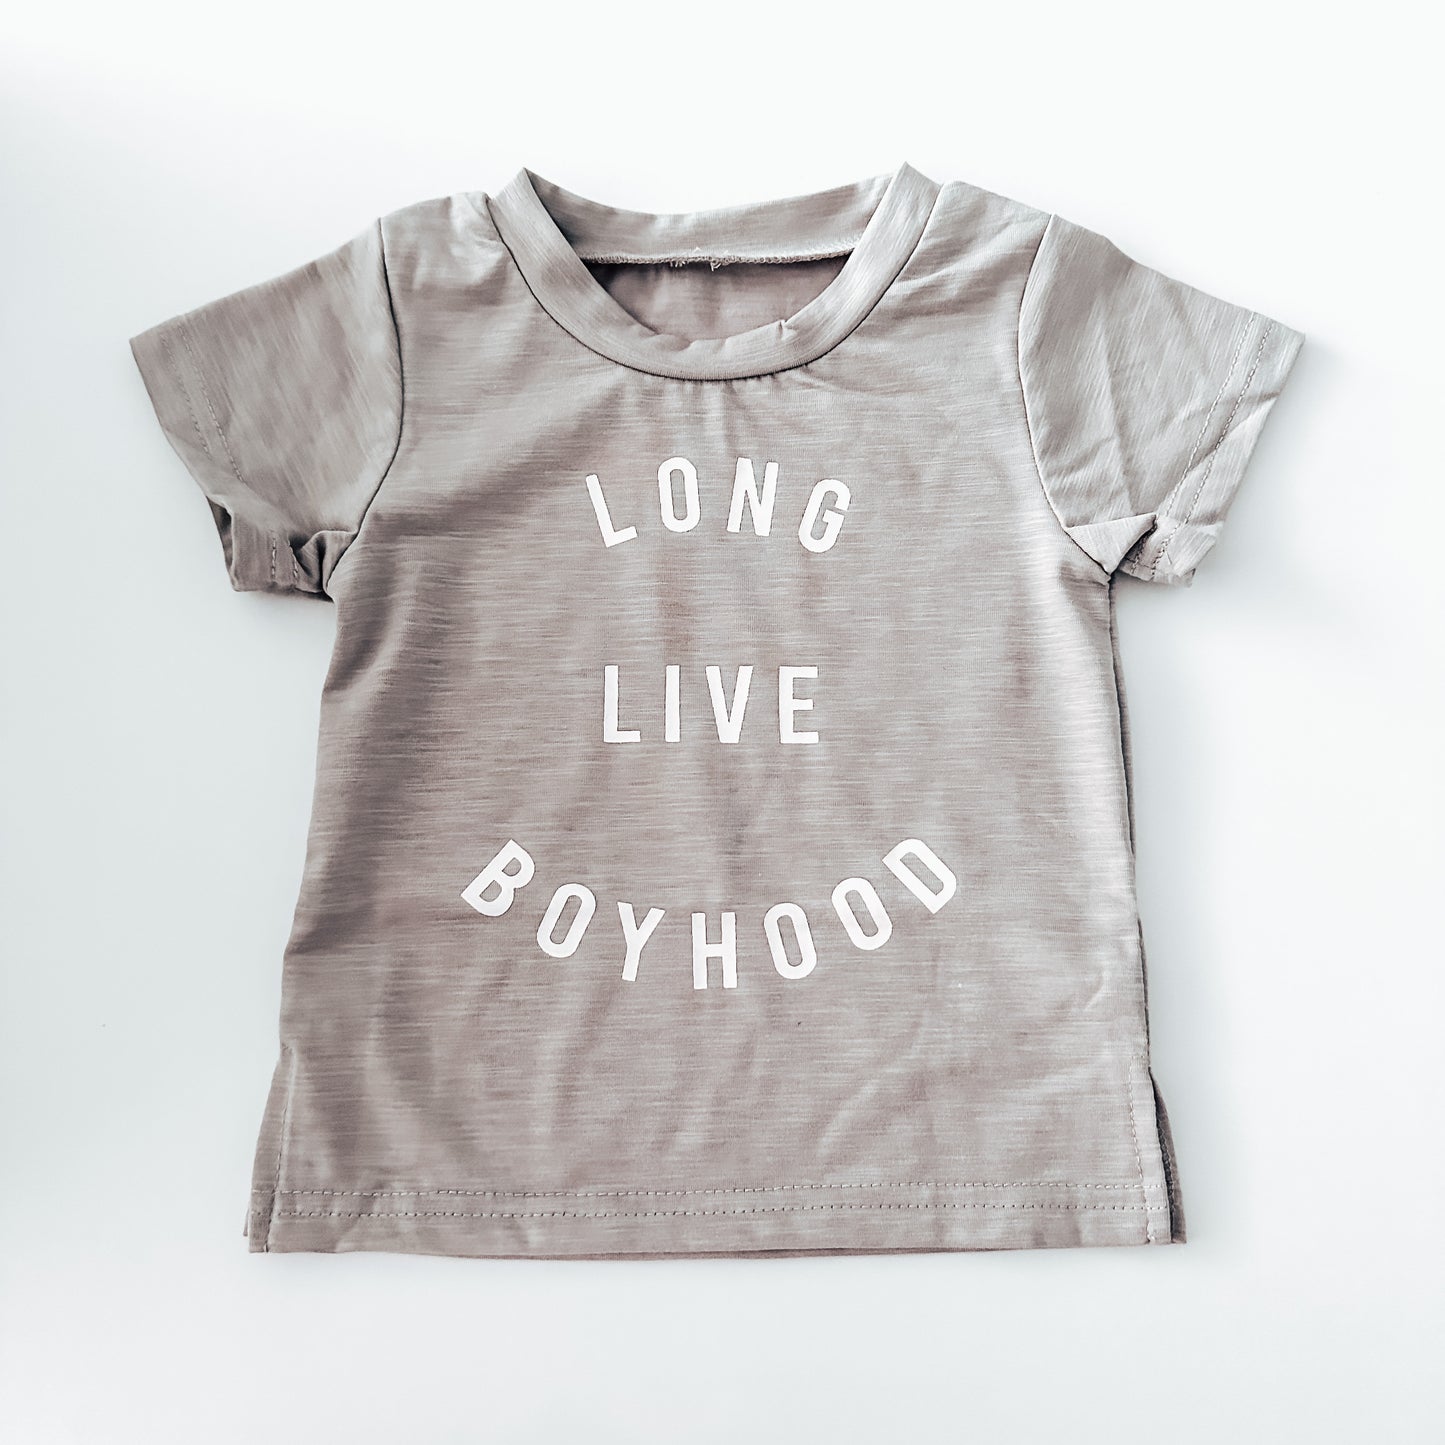 "Long Live Boyhood" Graphic Tee